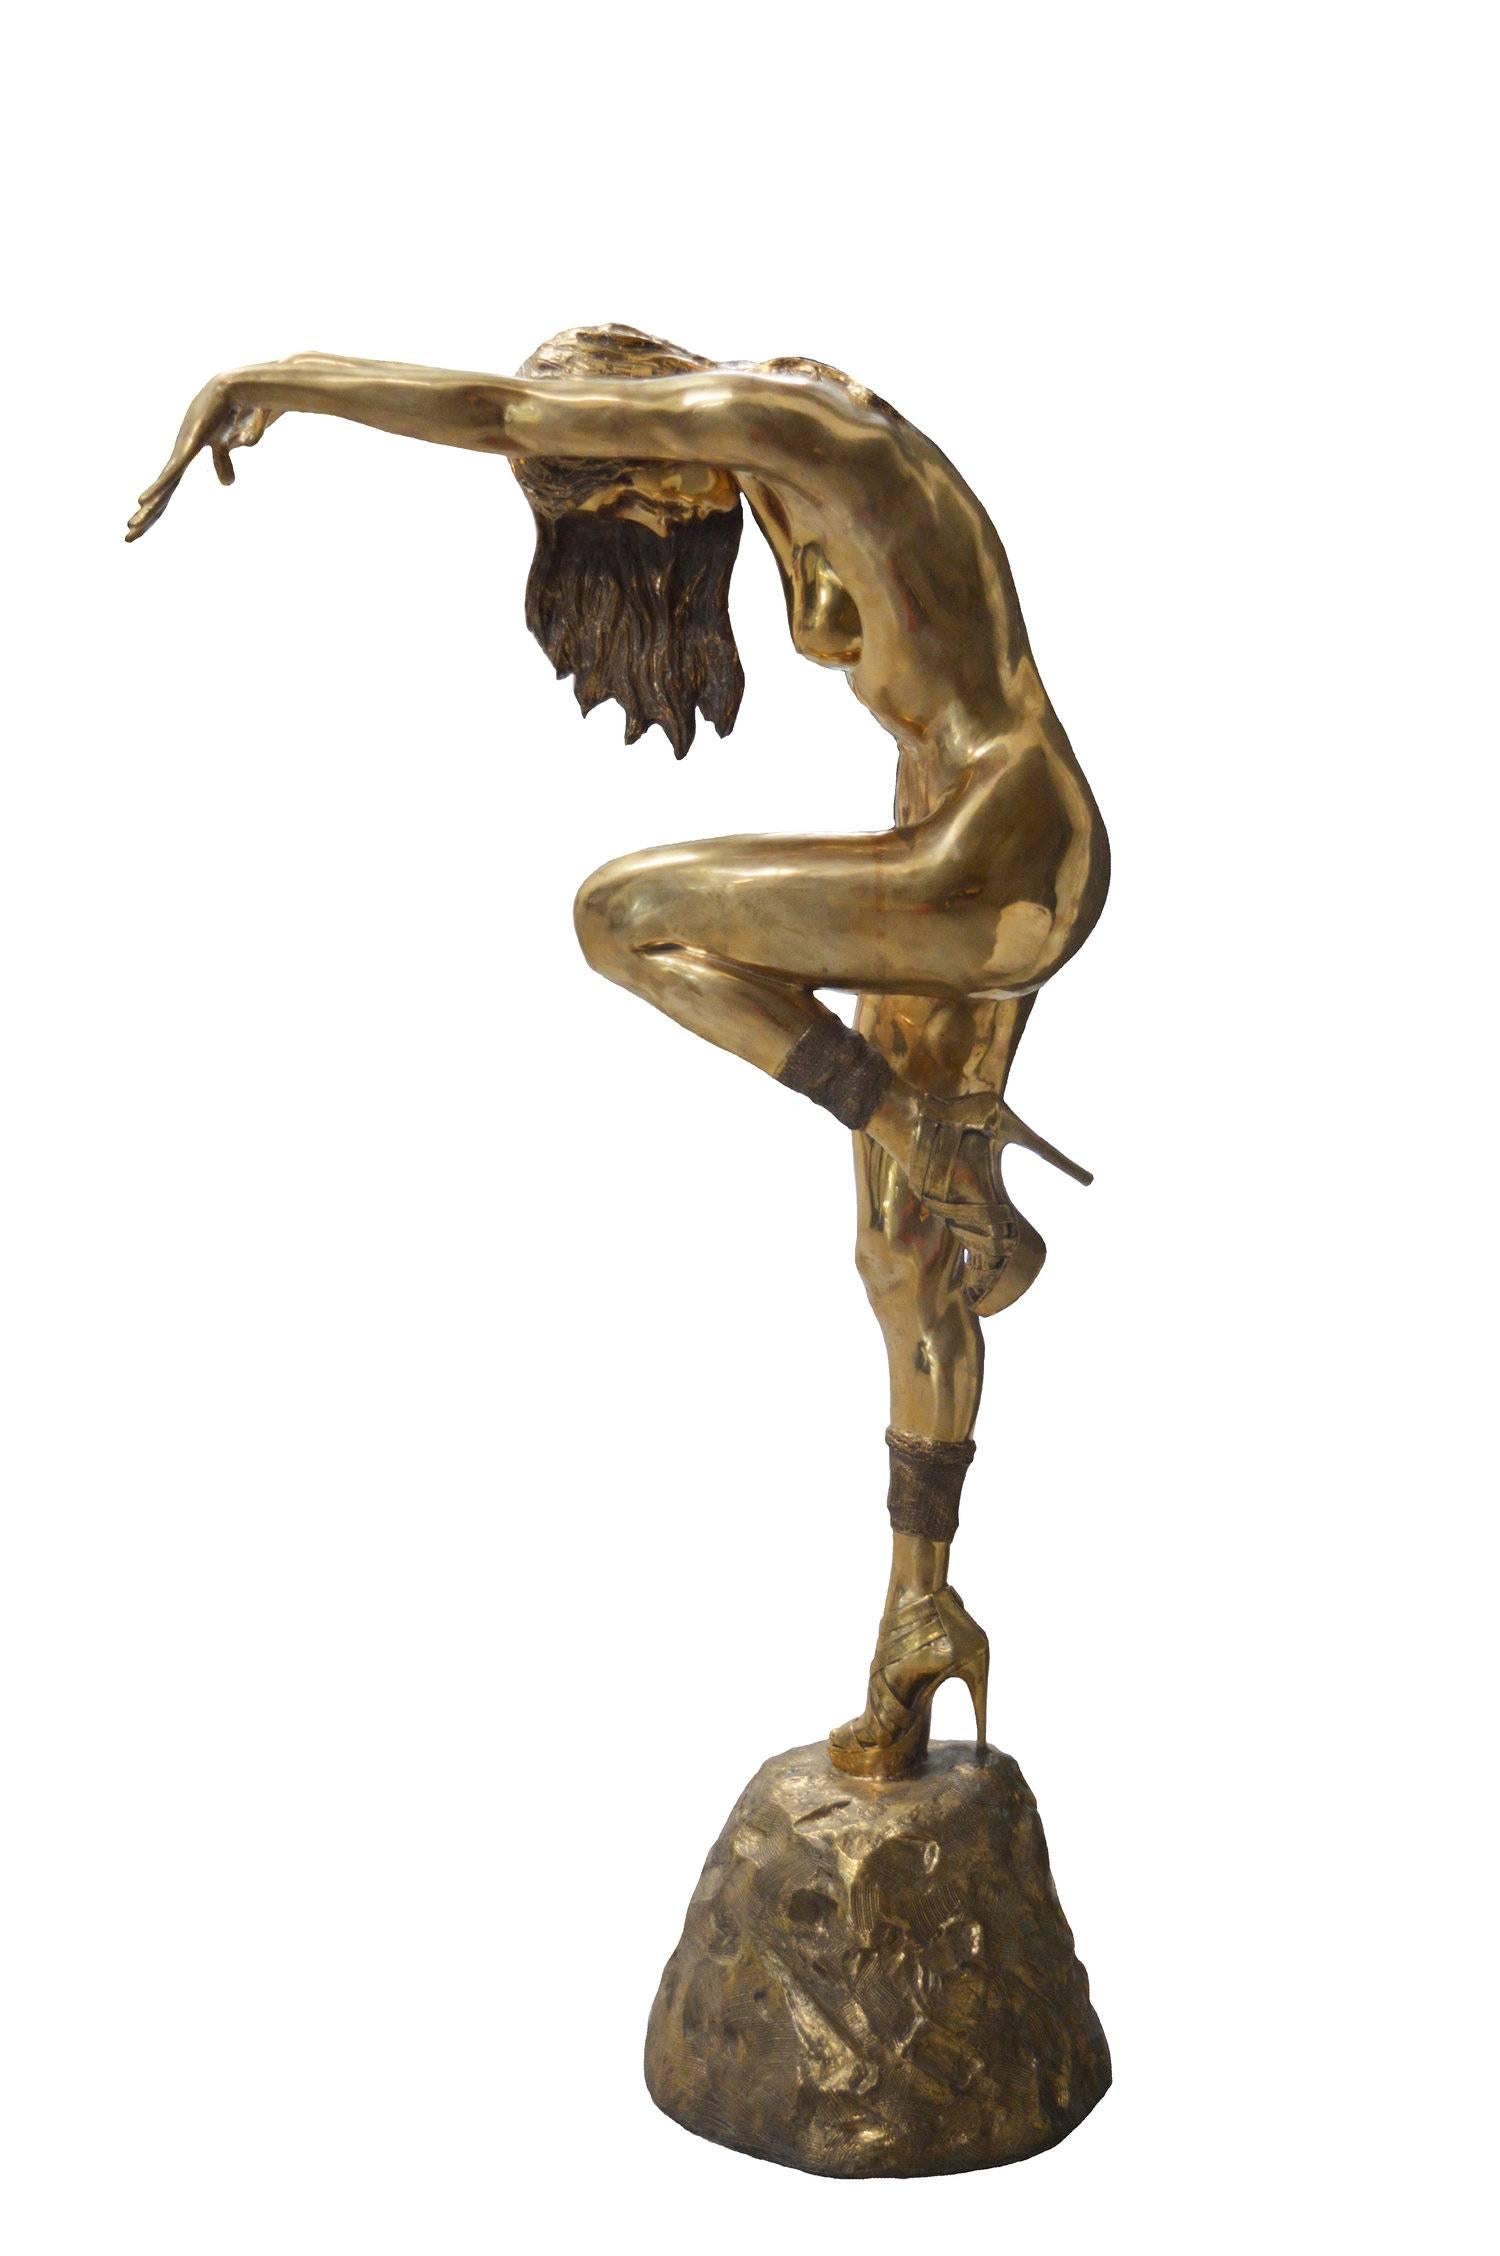 Christian Maas Nude Sculpture - Dancing Girl (Sonya)